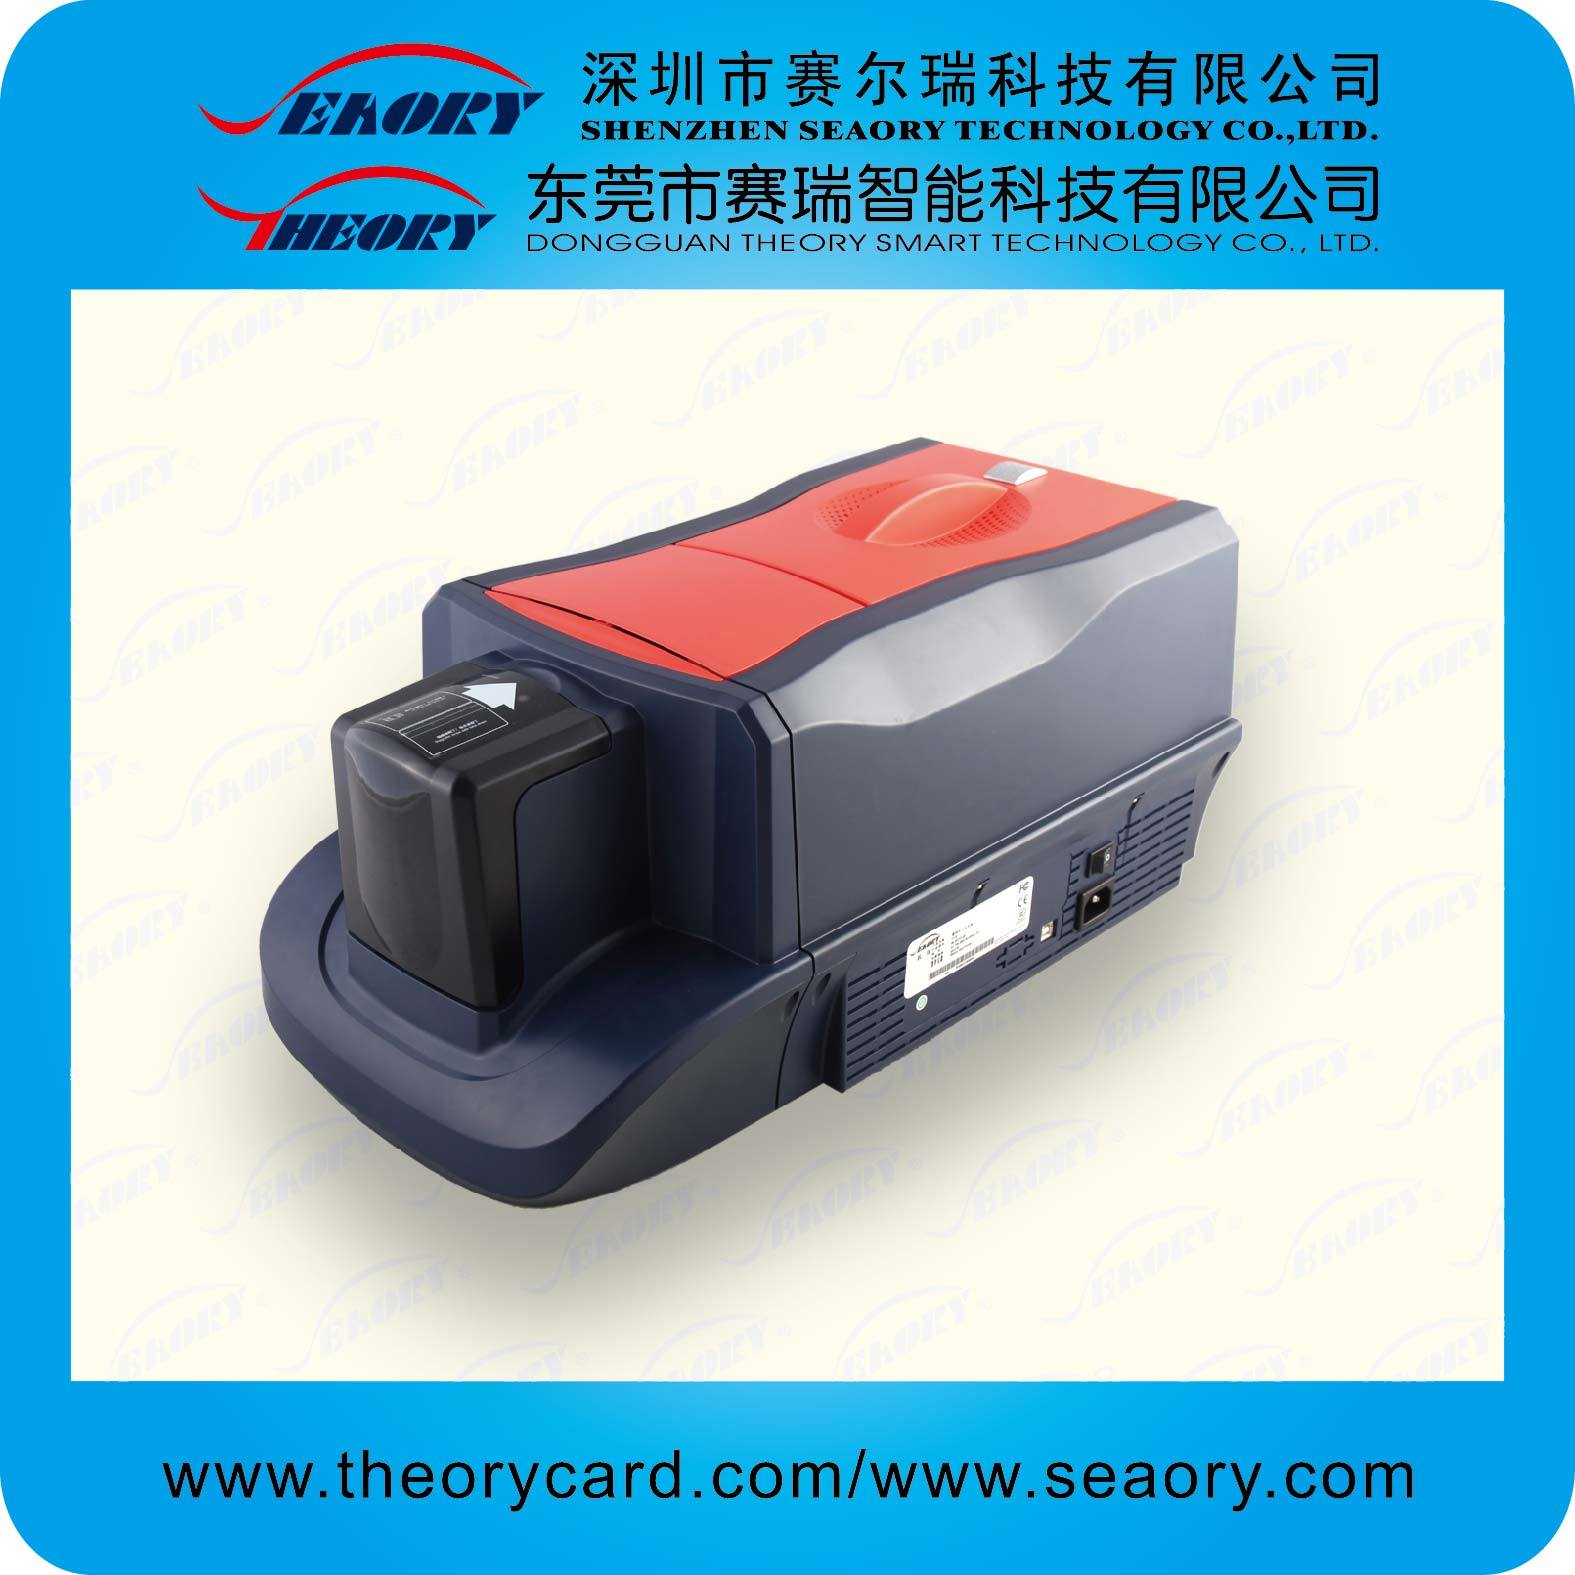 Seaory T11 300dpi Double Side PVC ID Card Printer